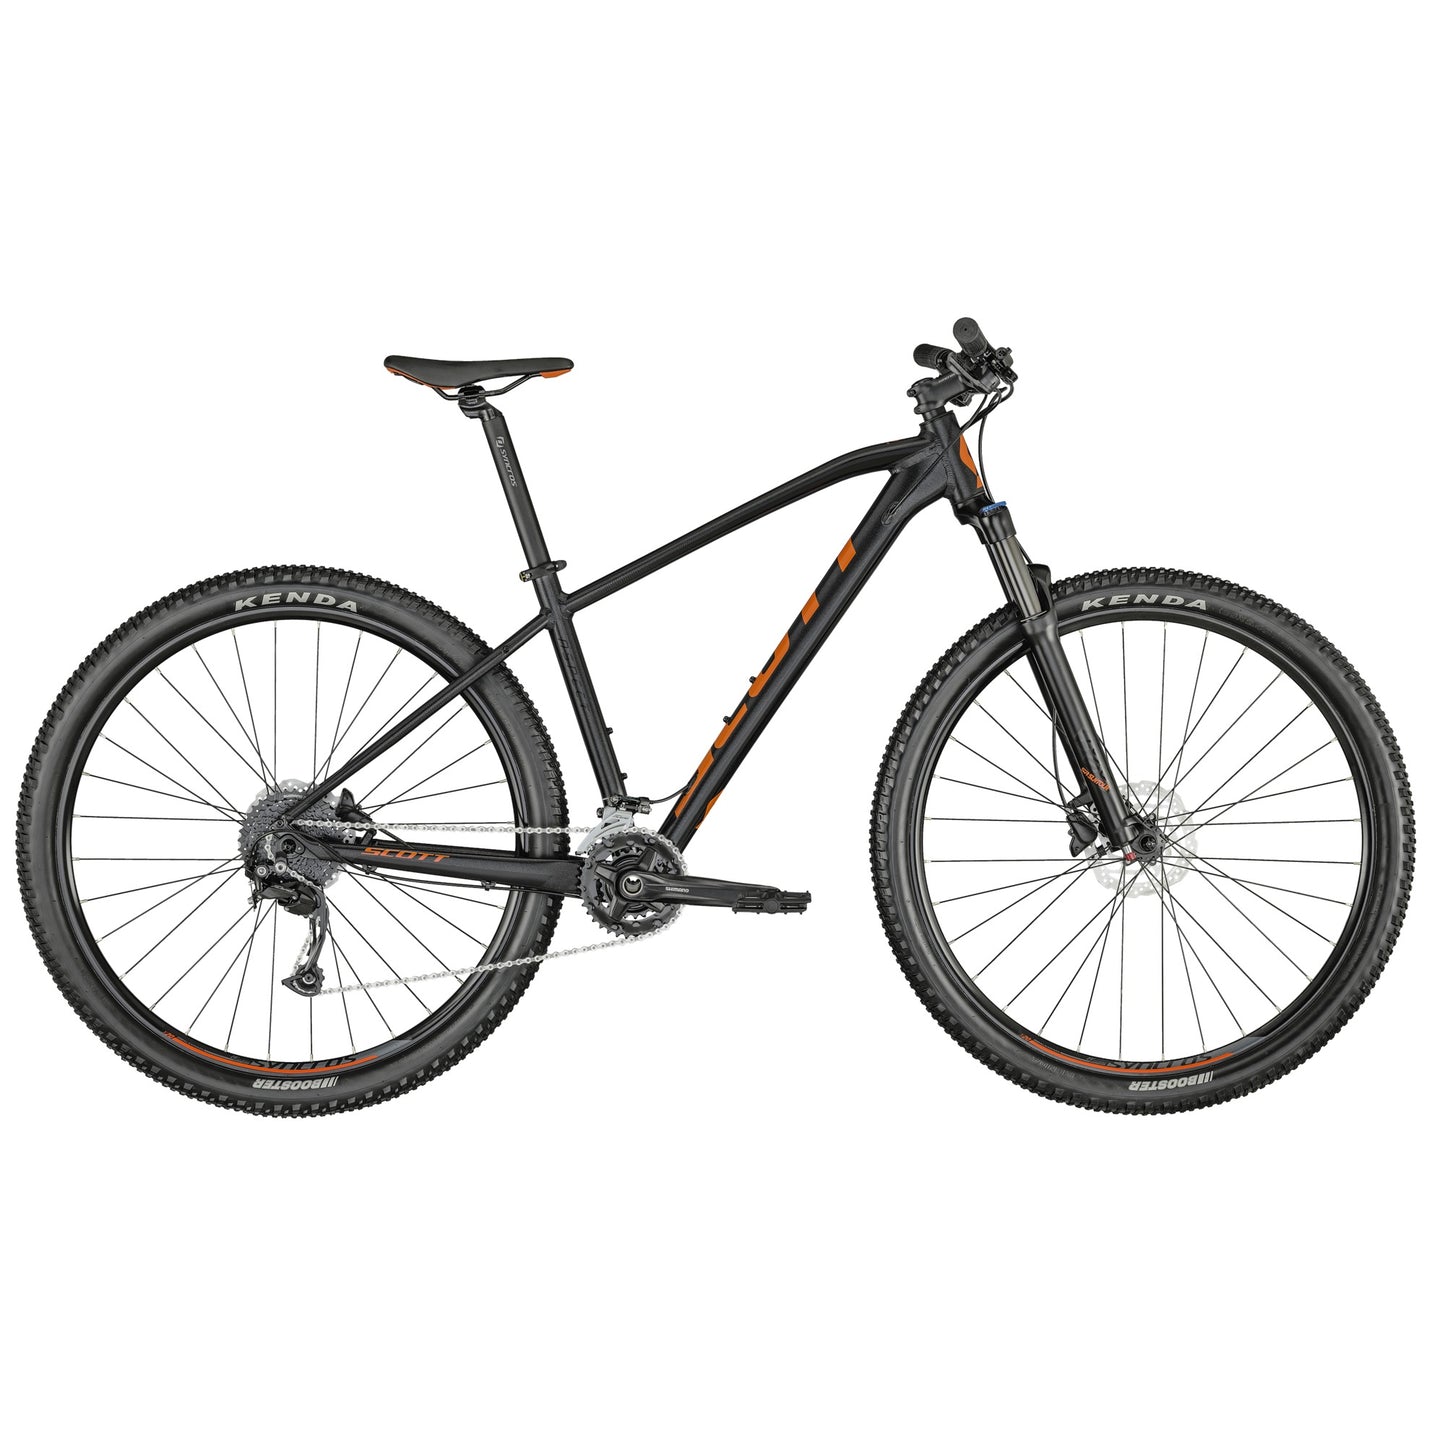 Bicicleta Scott Aspect 940 2022 Aluminio 9 VEL